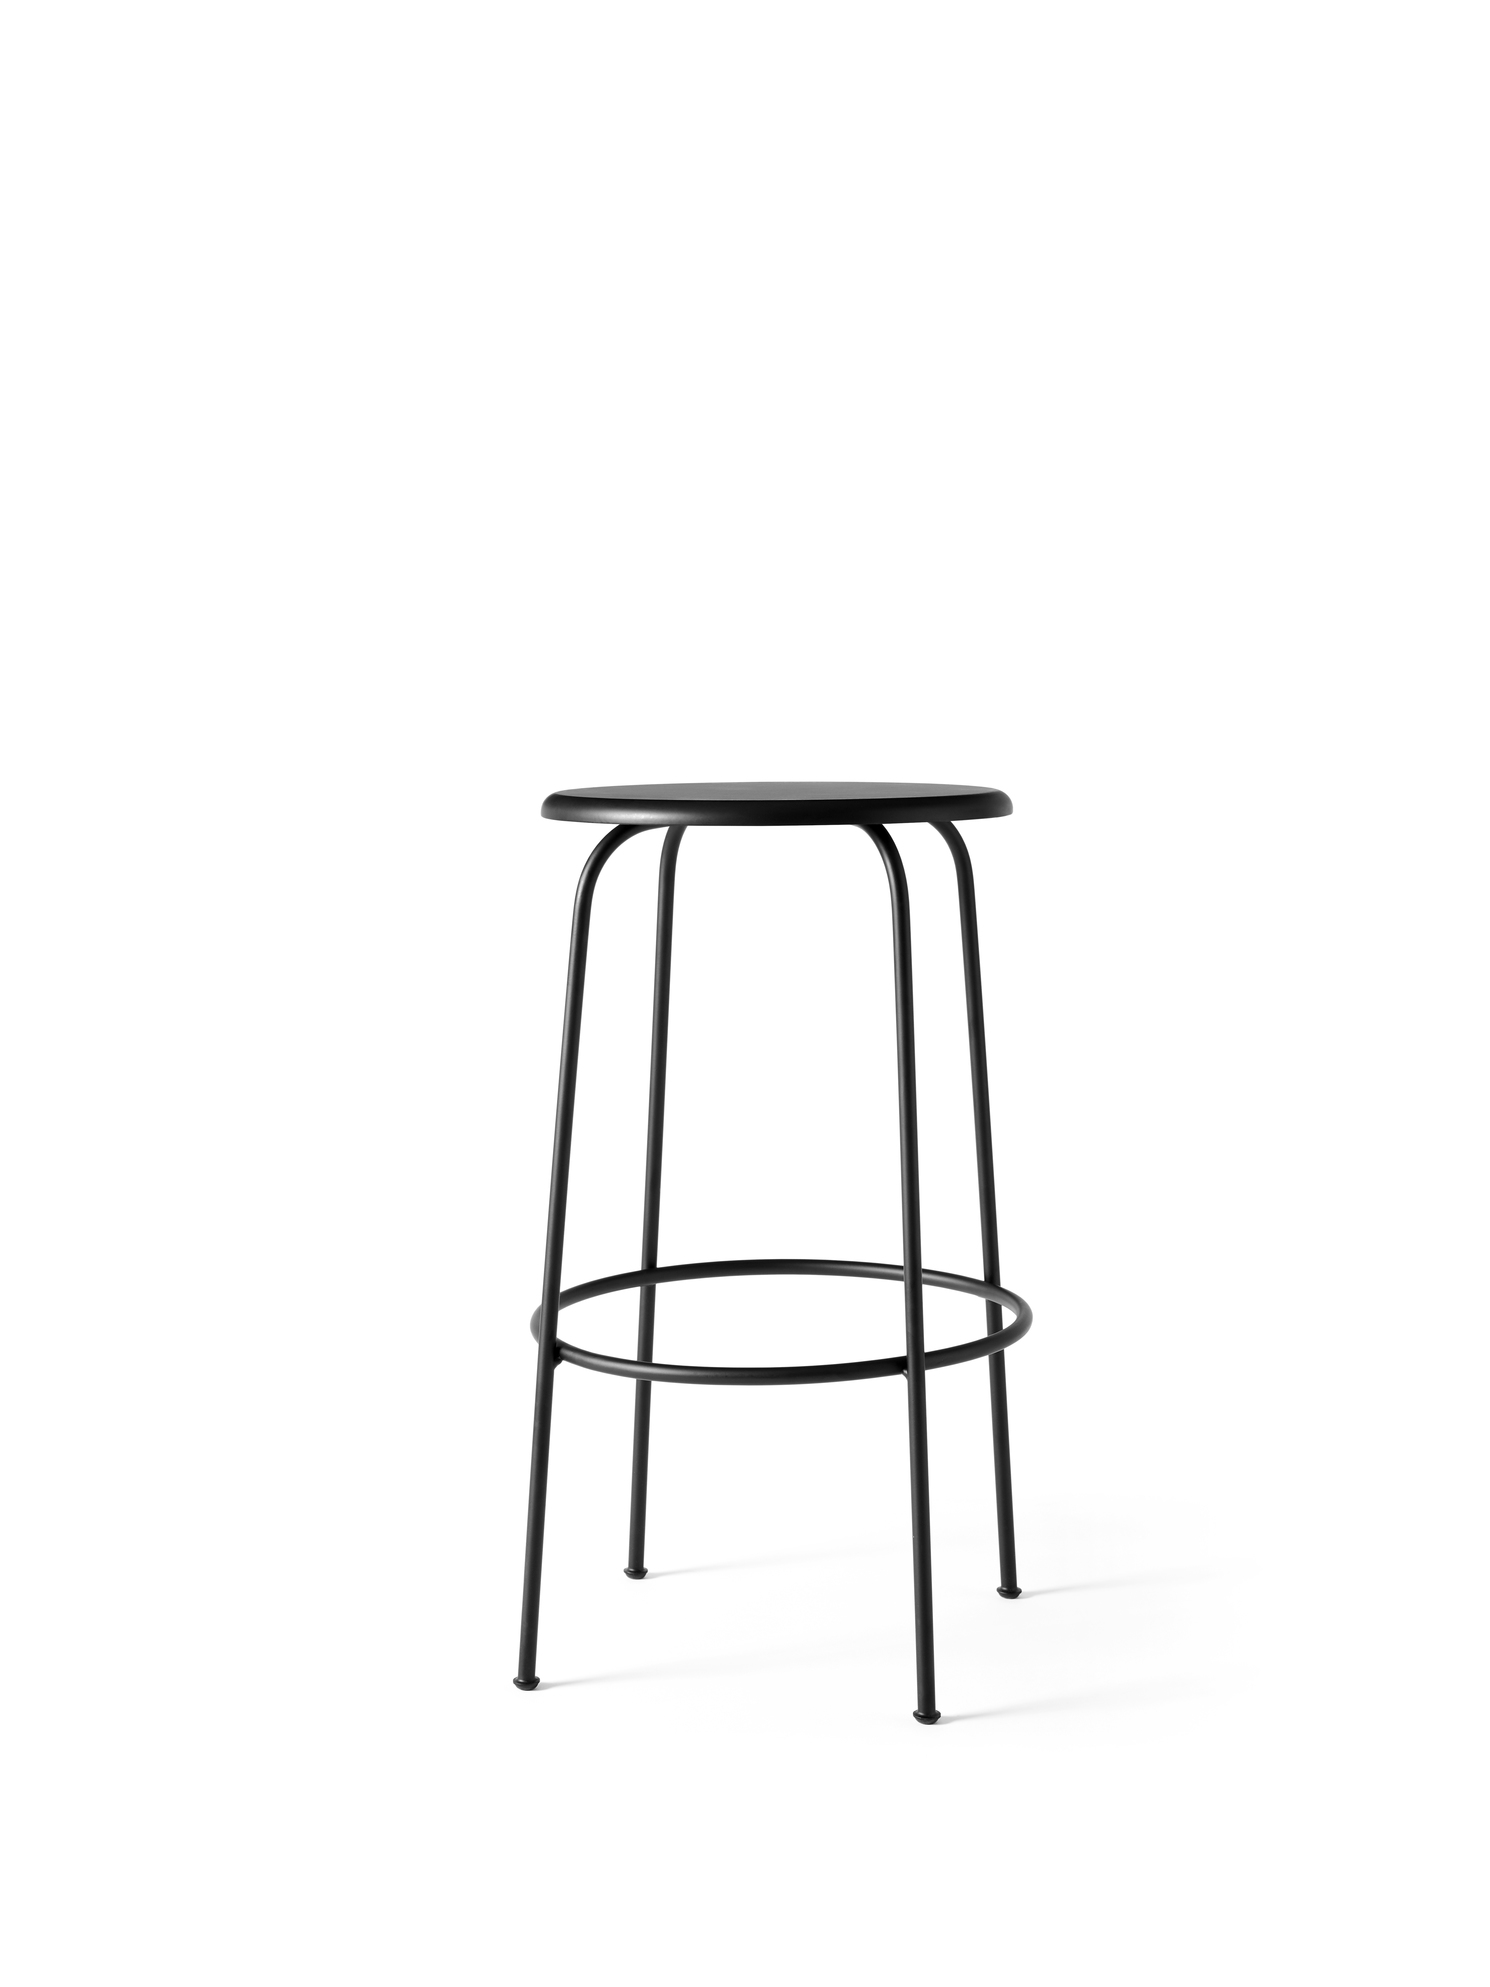 Menu - Afteroom barkruk, zwart stalen frame en zwarte zitting, zithoogte 75 cm